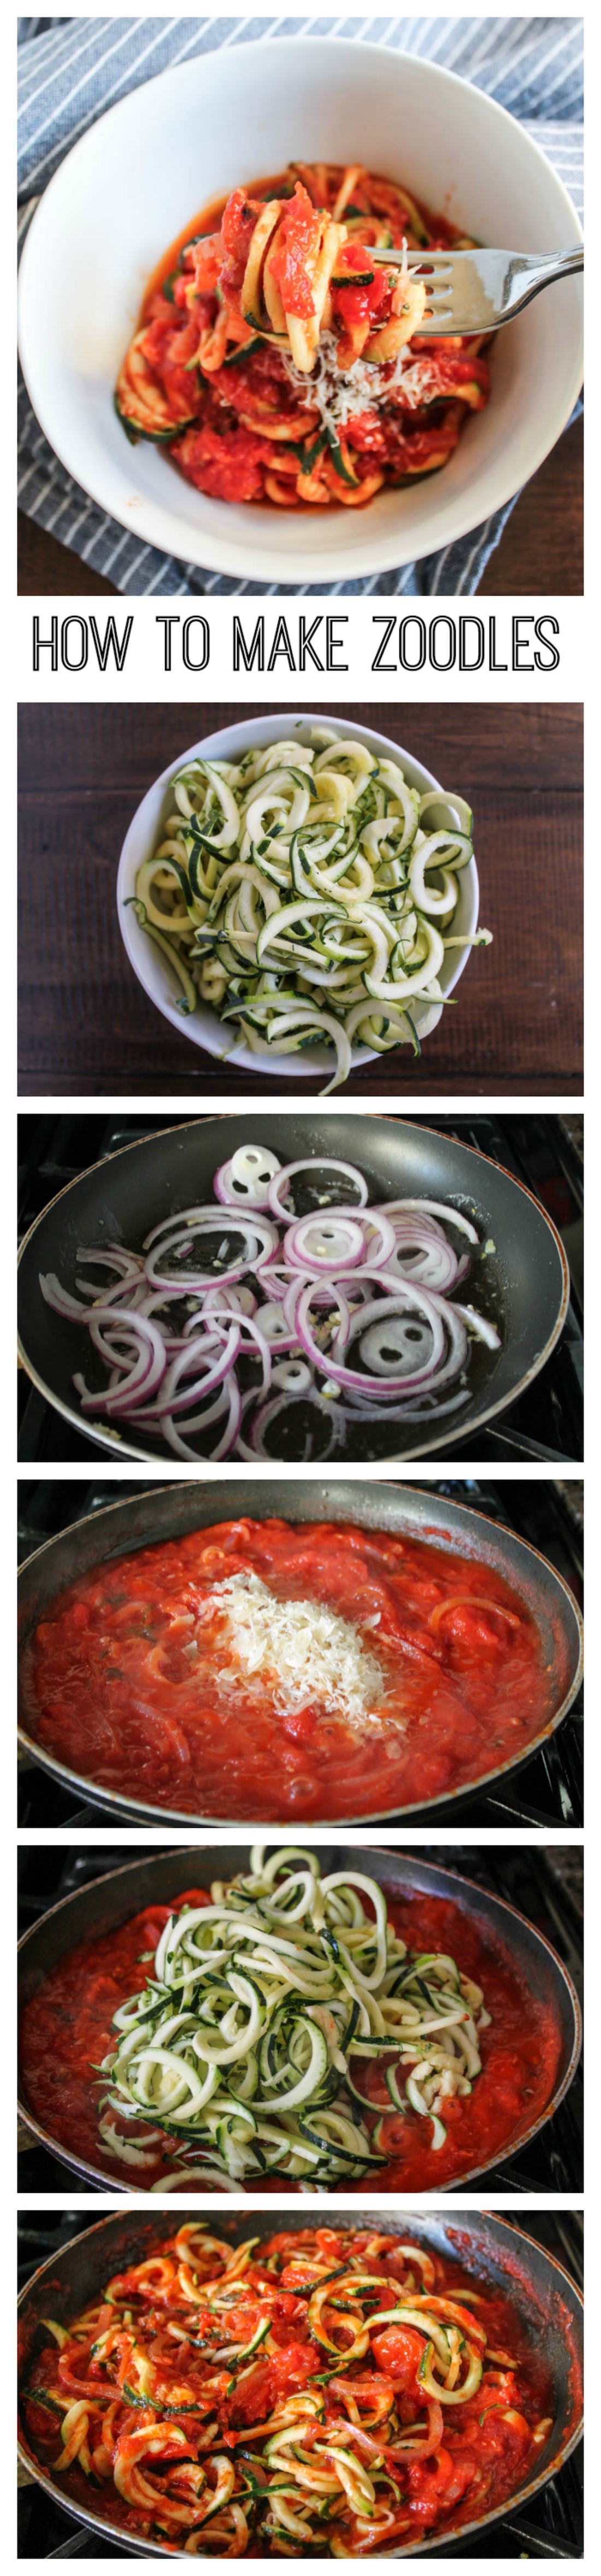 How to Make Zoodles - Zucchini Pasta via The Kittchen